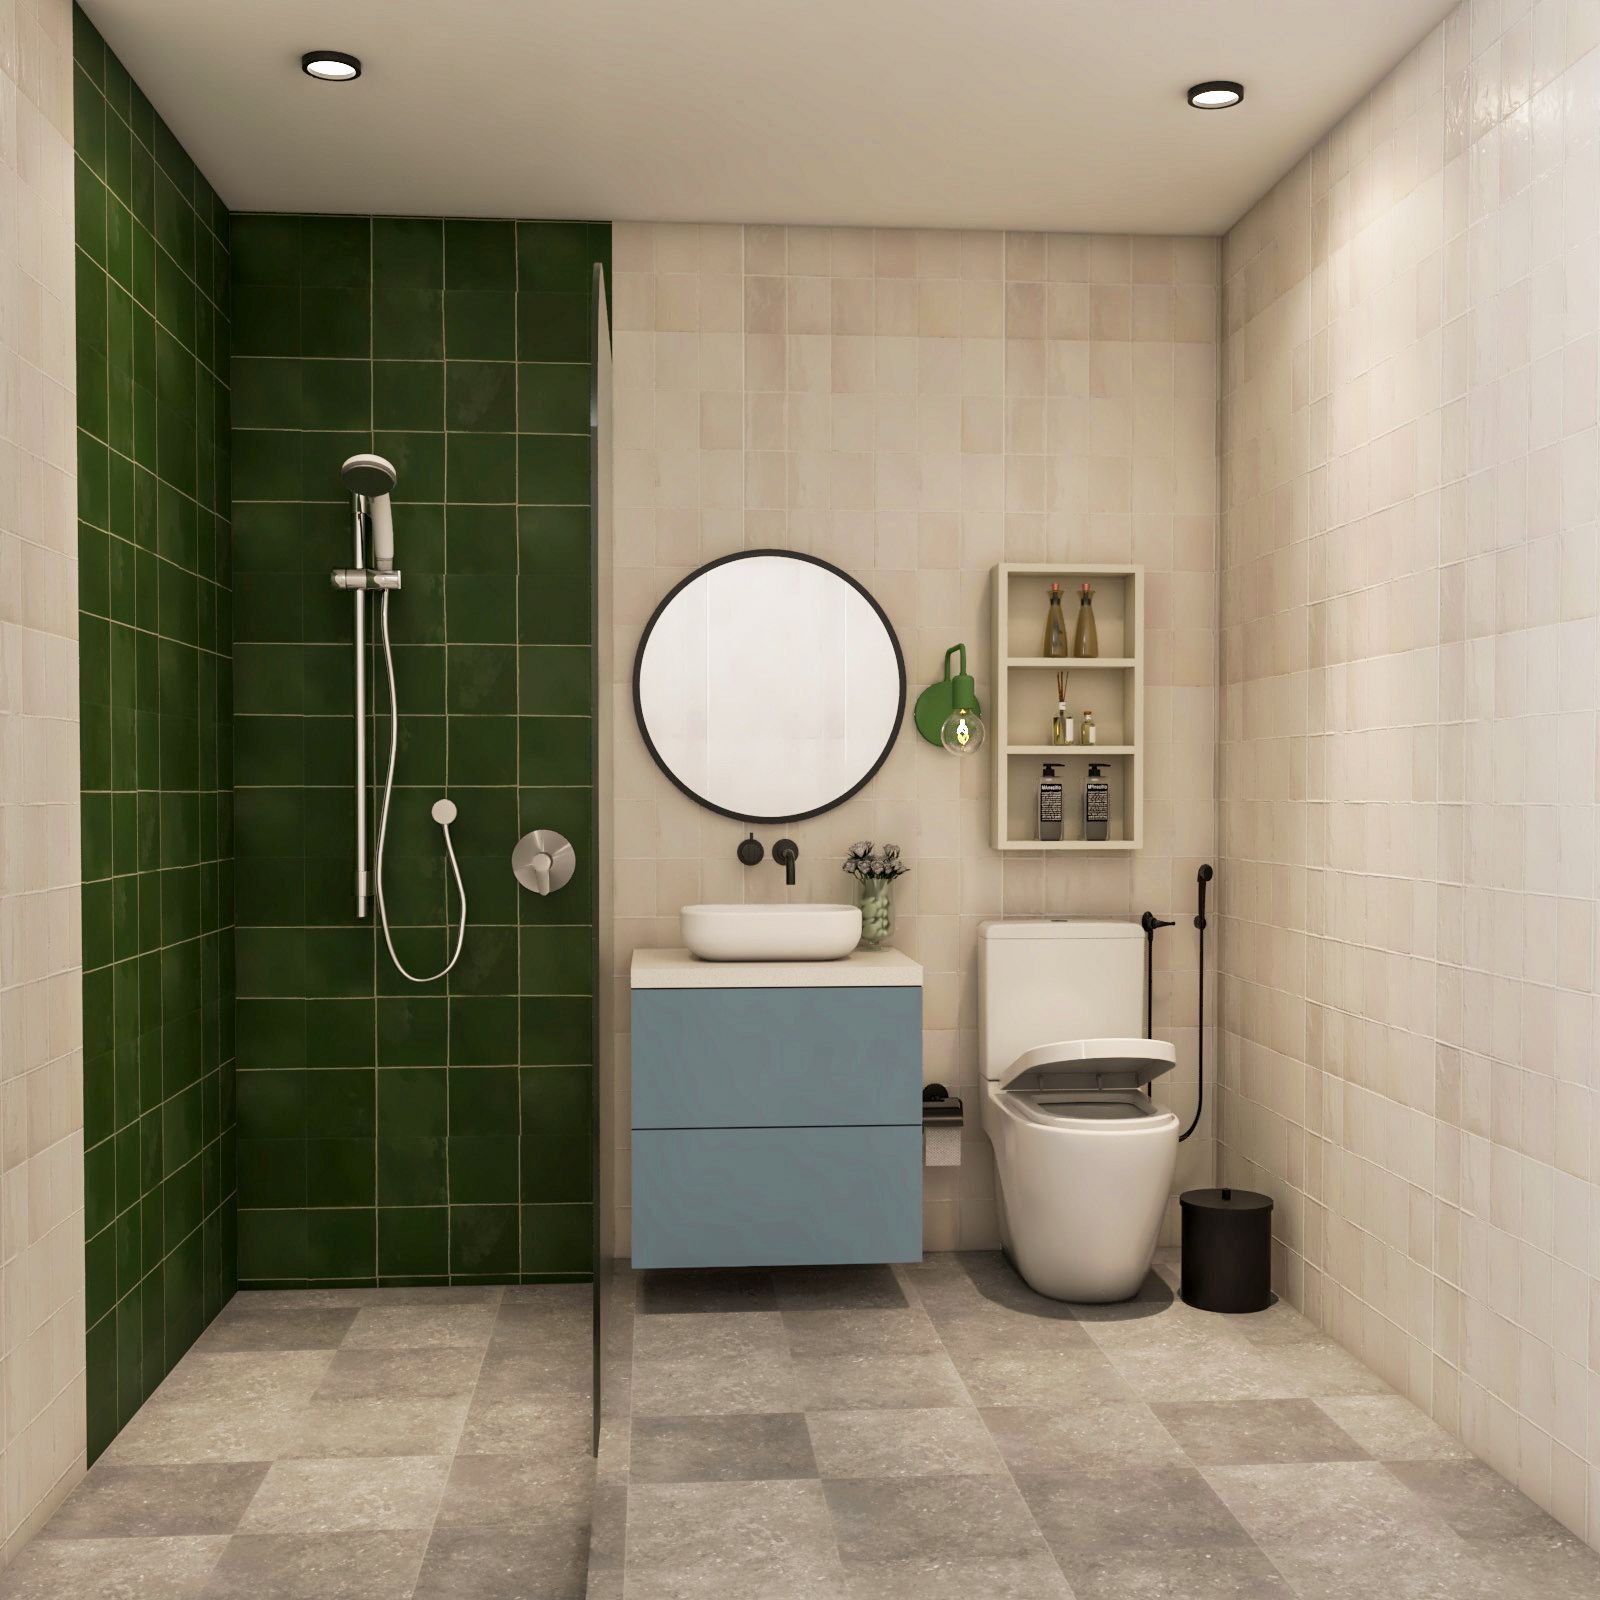 Contemporary Multicoloured Bathroom Design With Round Mirror